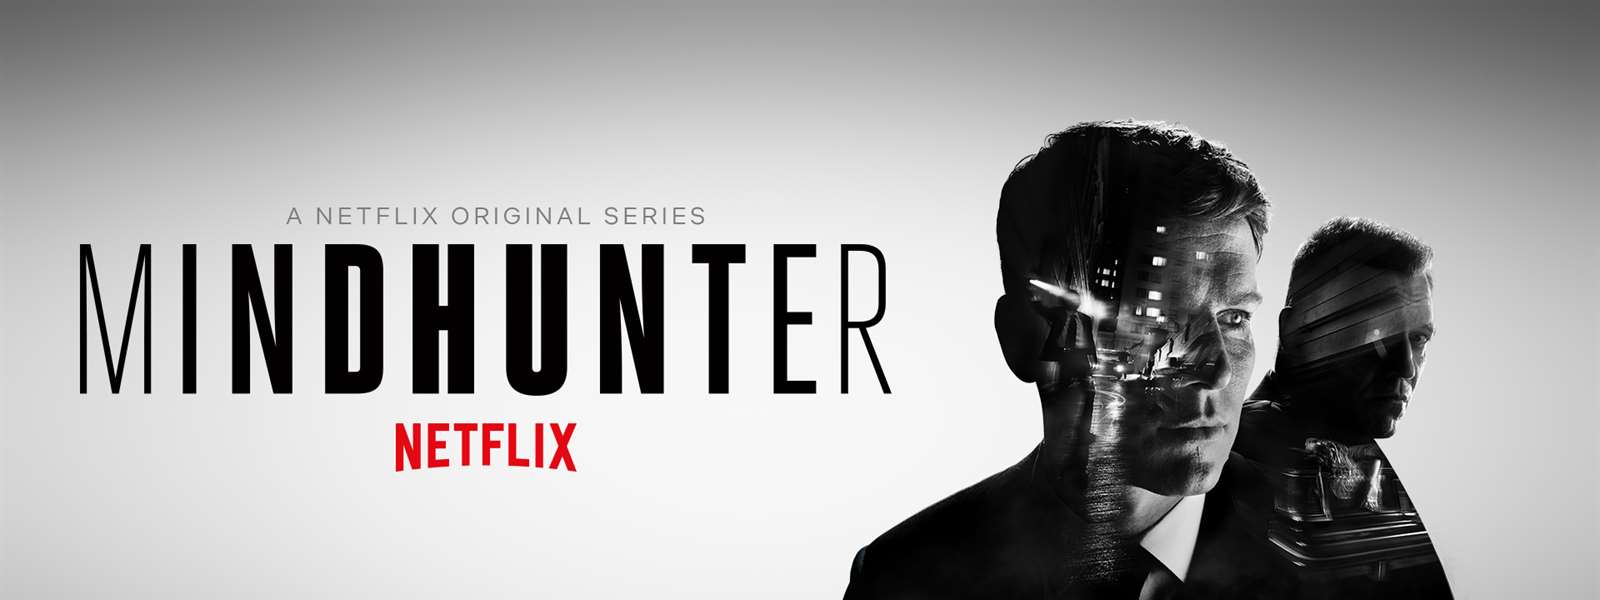 Mindhunter, série originale Netflix